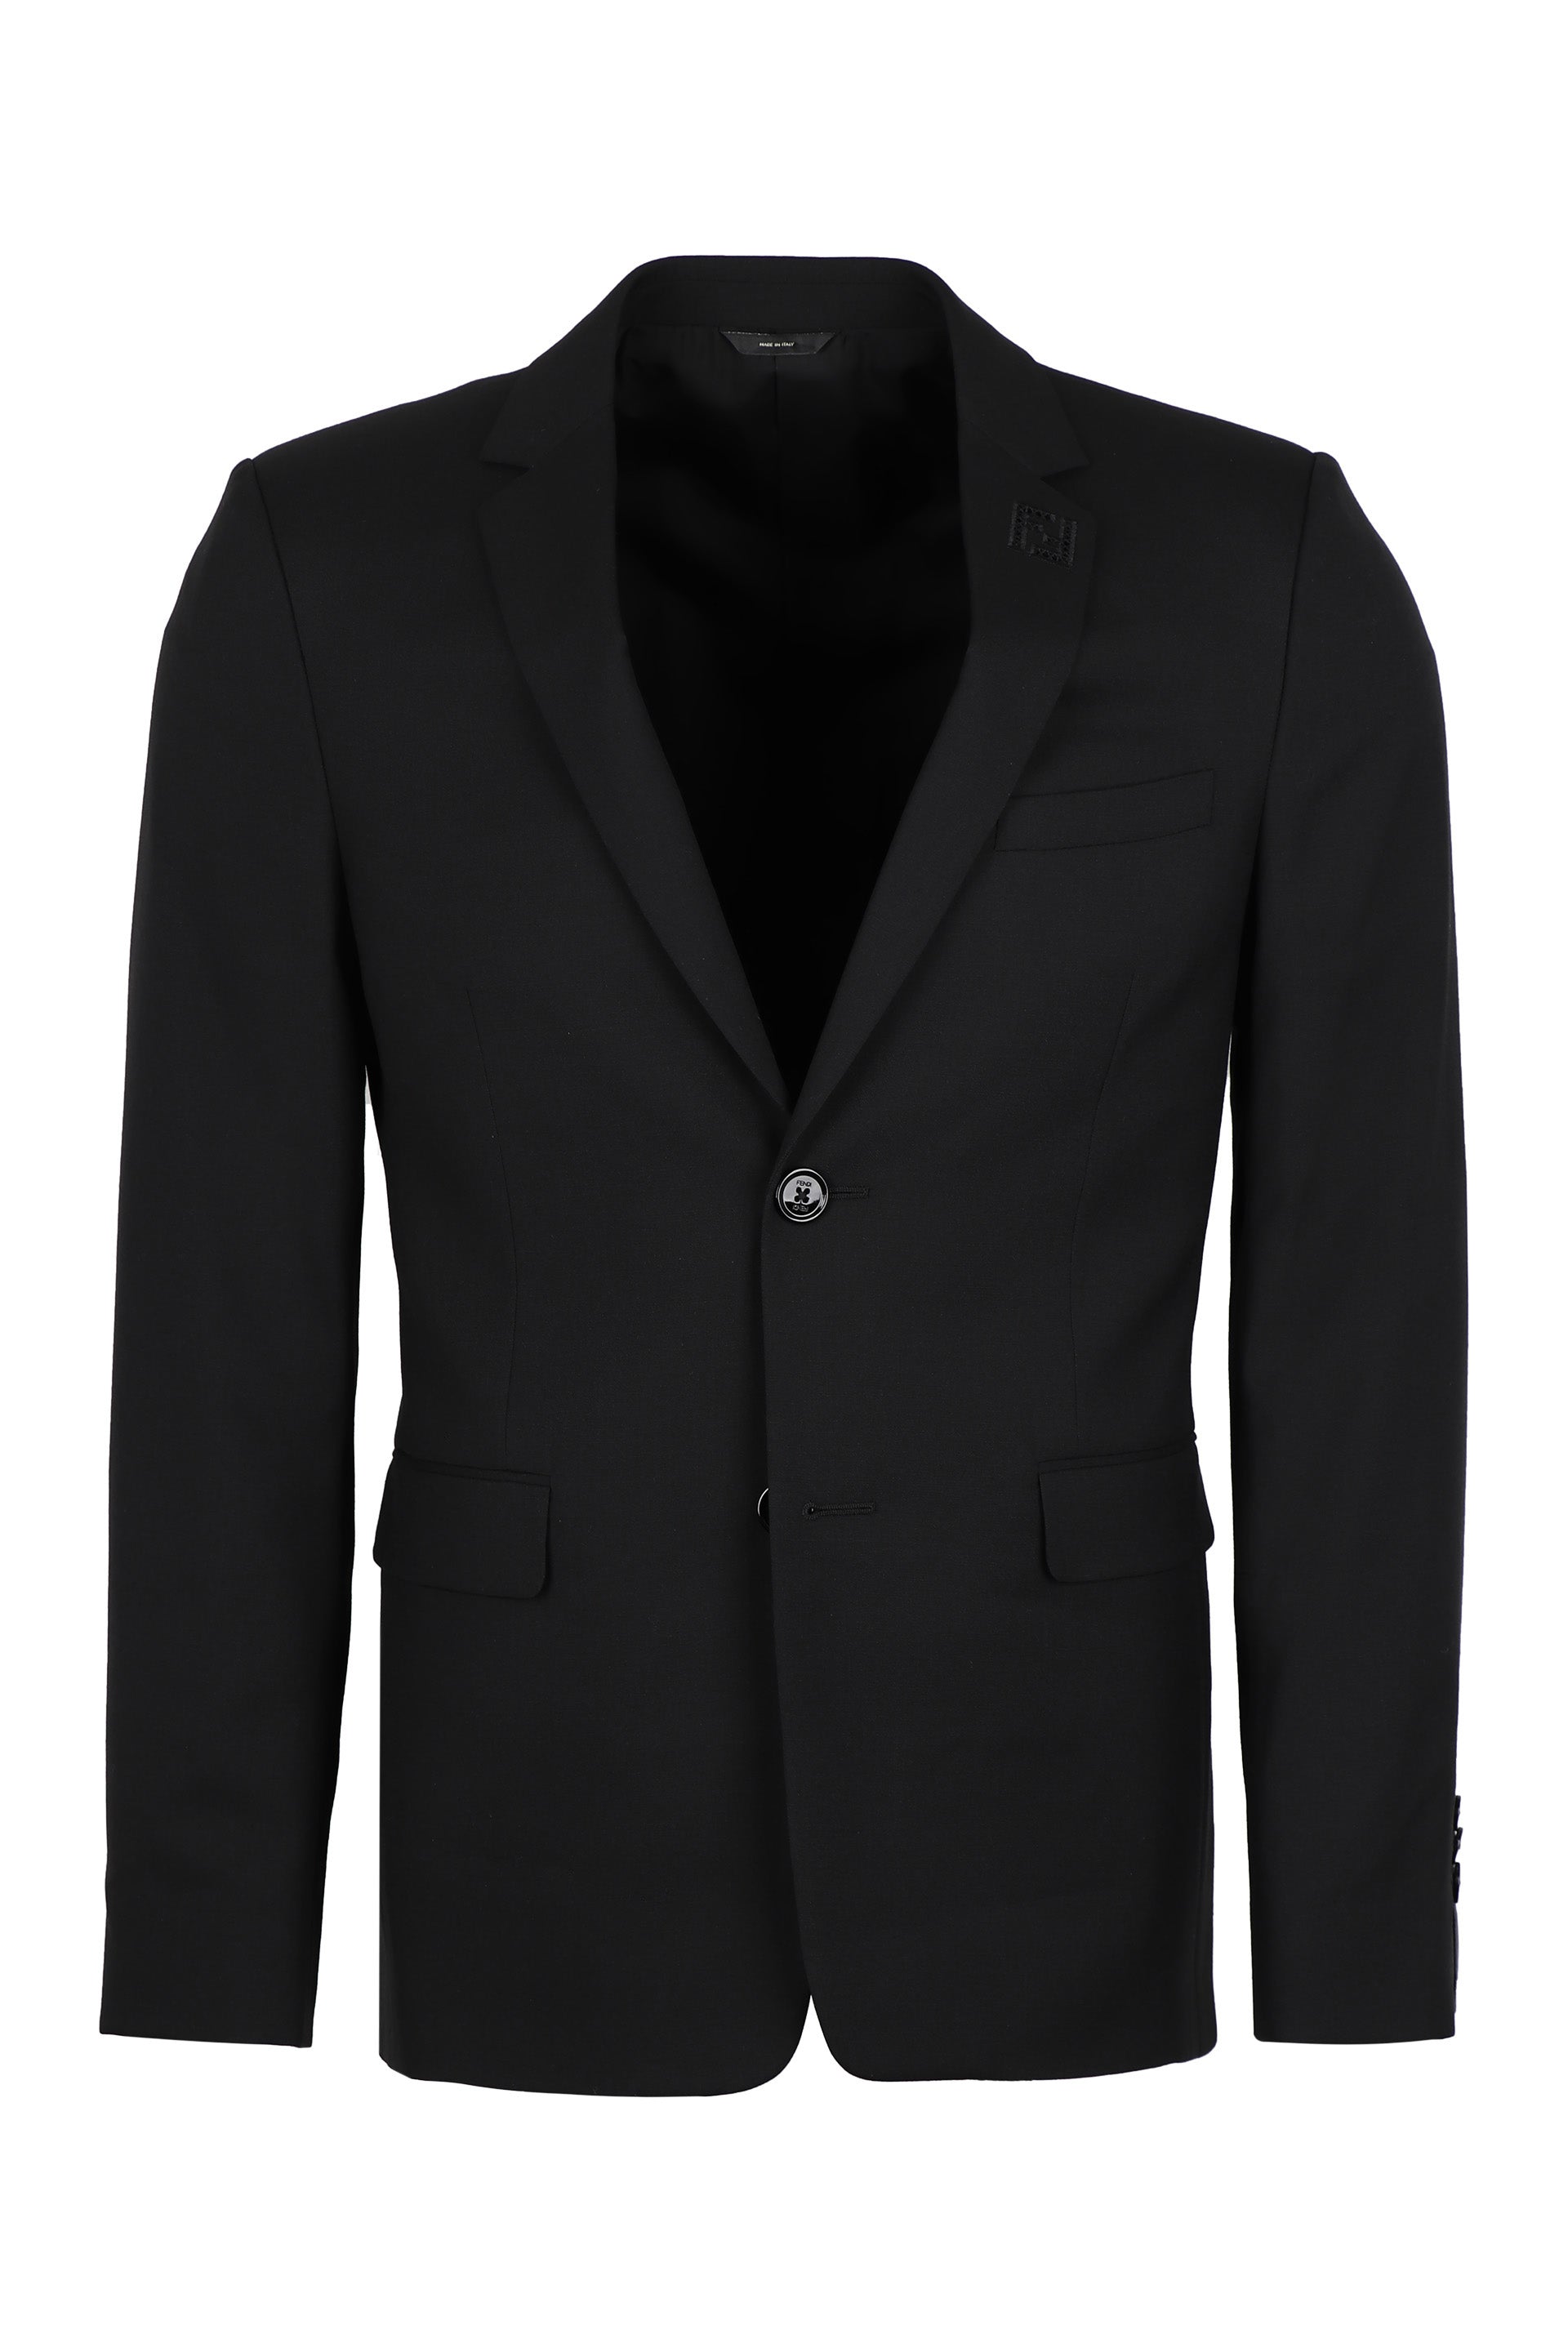 Fendi Men's Black Single-breasted Jacket For Ss21